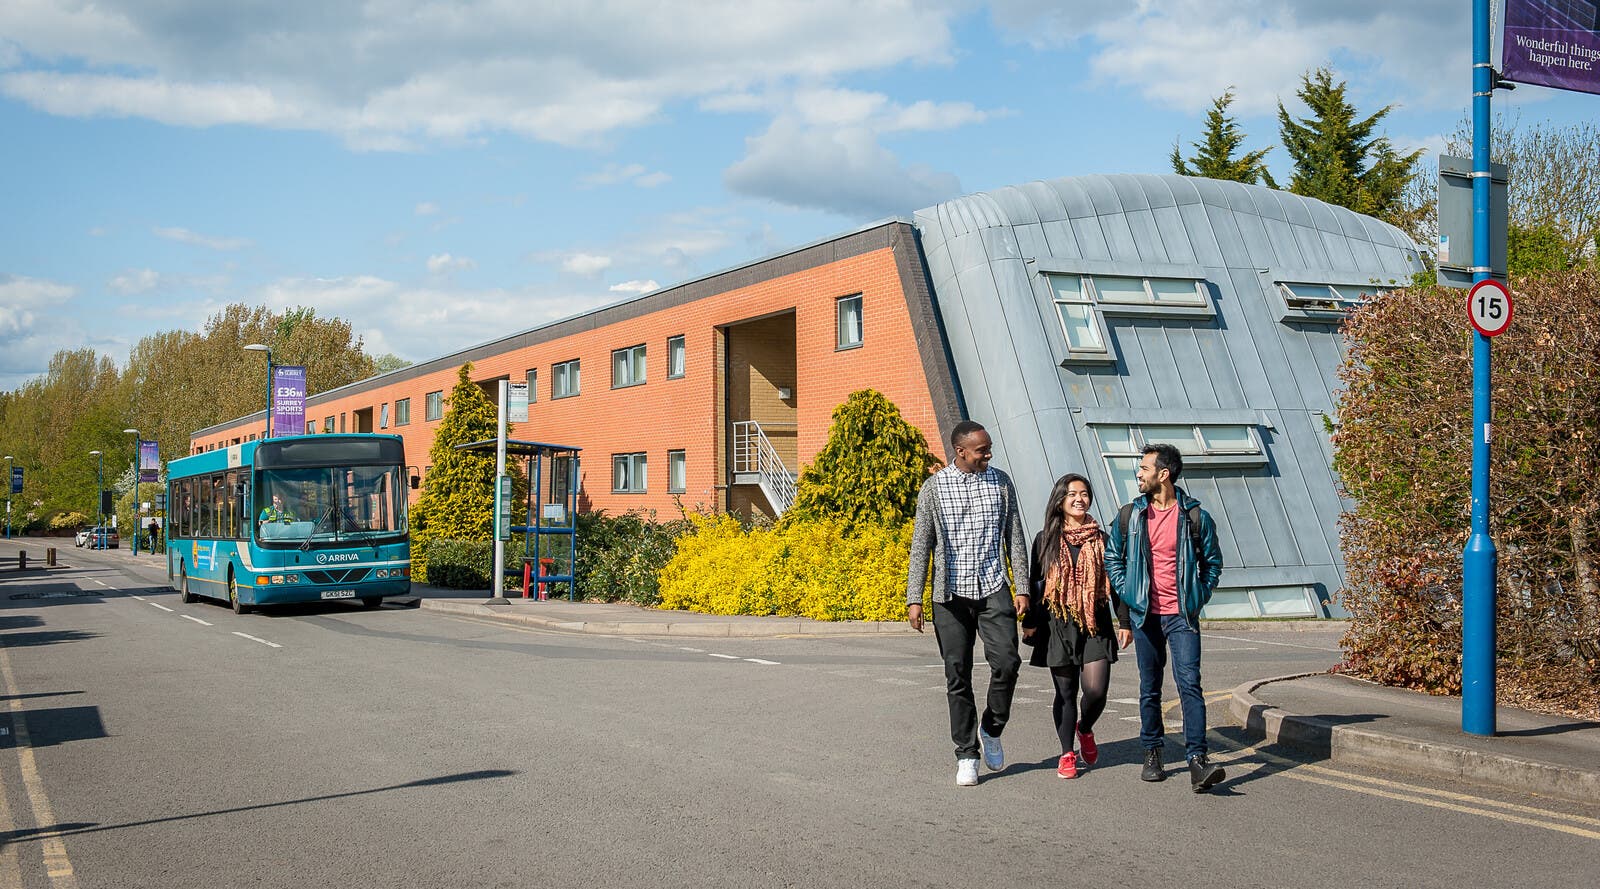 Surrey students walking together outside accommodation